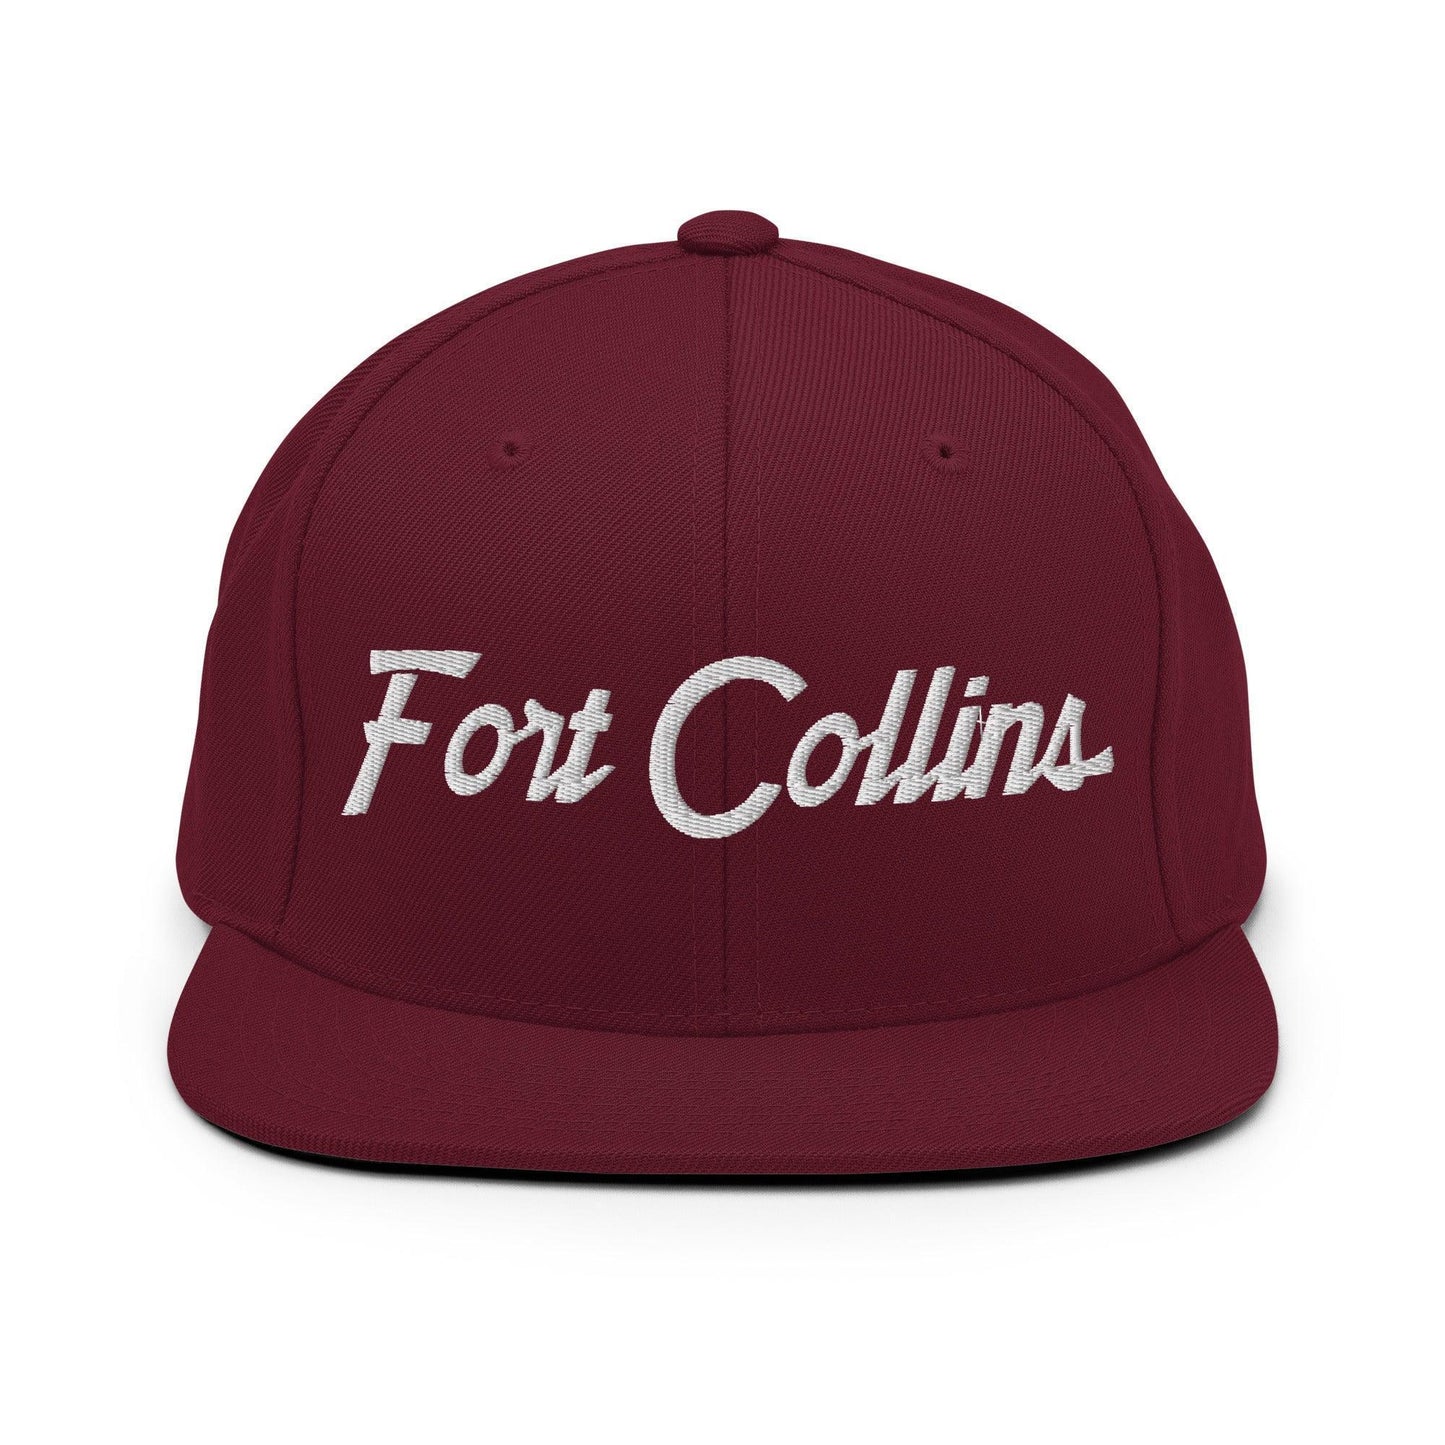 Fort Collins Script Snapback Hat Maroon